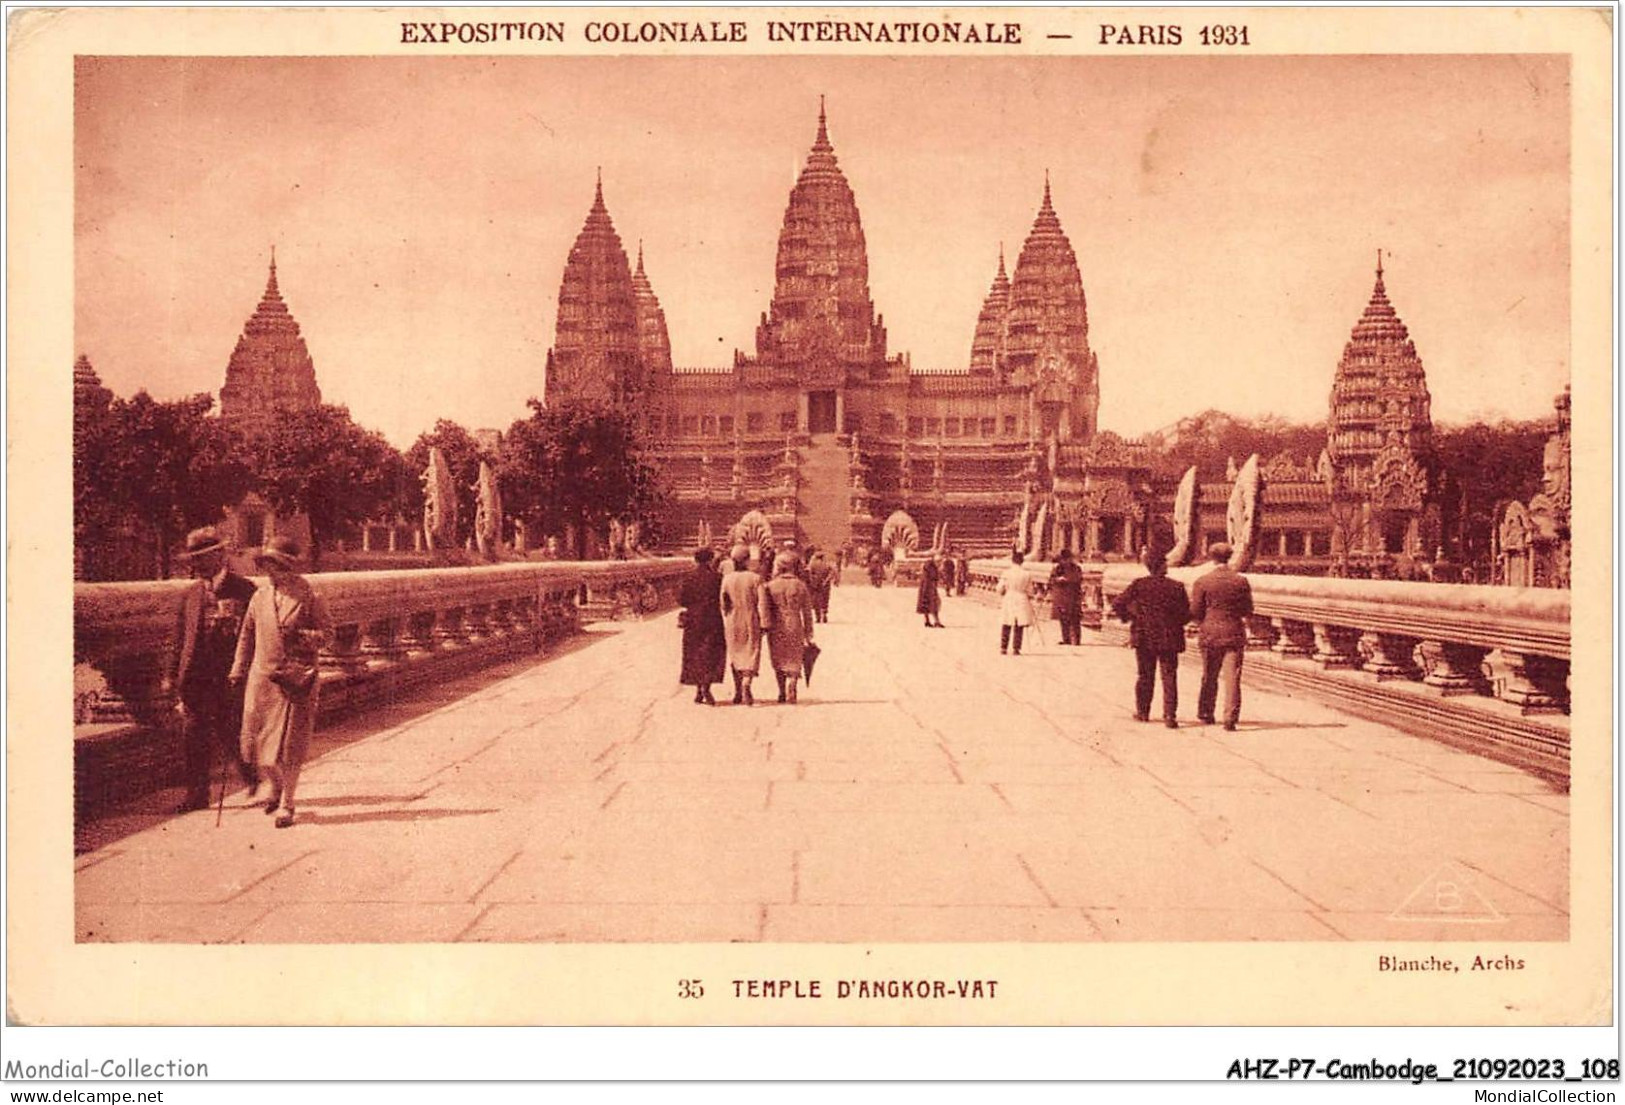 AHZP7-CAMBODGE-0650 - EXPOSITION COLONIALE INTERNATIONALE - PARIS 1931 - TEMPLE D'ANGKOR-VAT - Cambodge